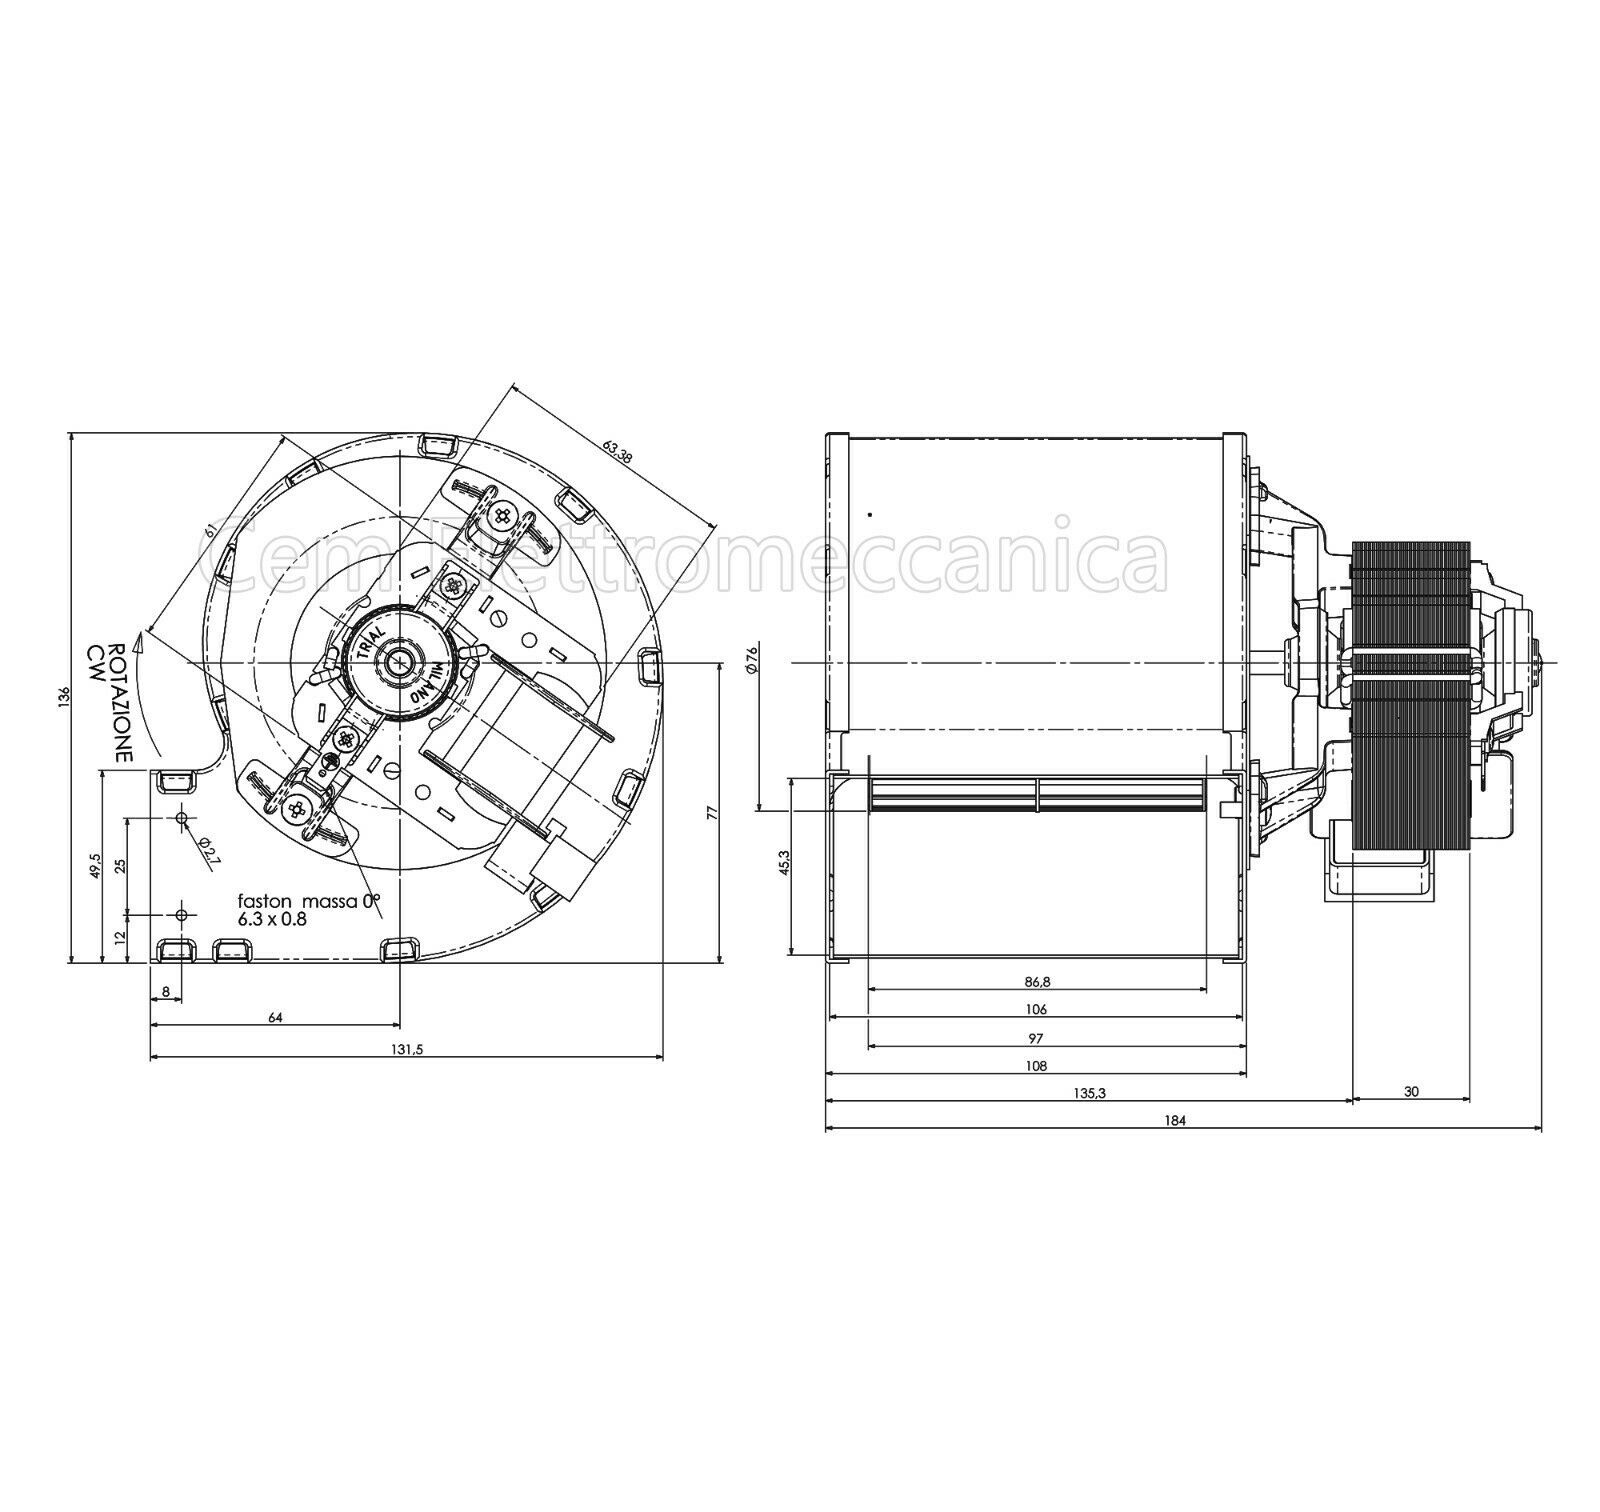 Ventilatore centrifugo per stufa a pellet 66 watt motore DX ventola monofase